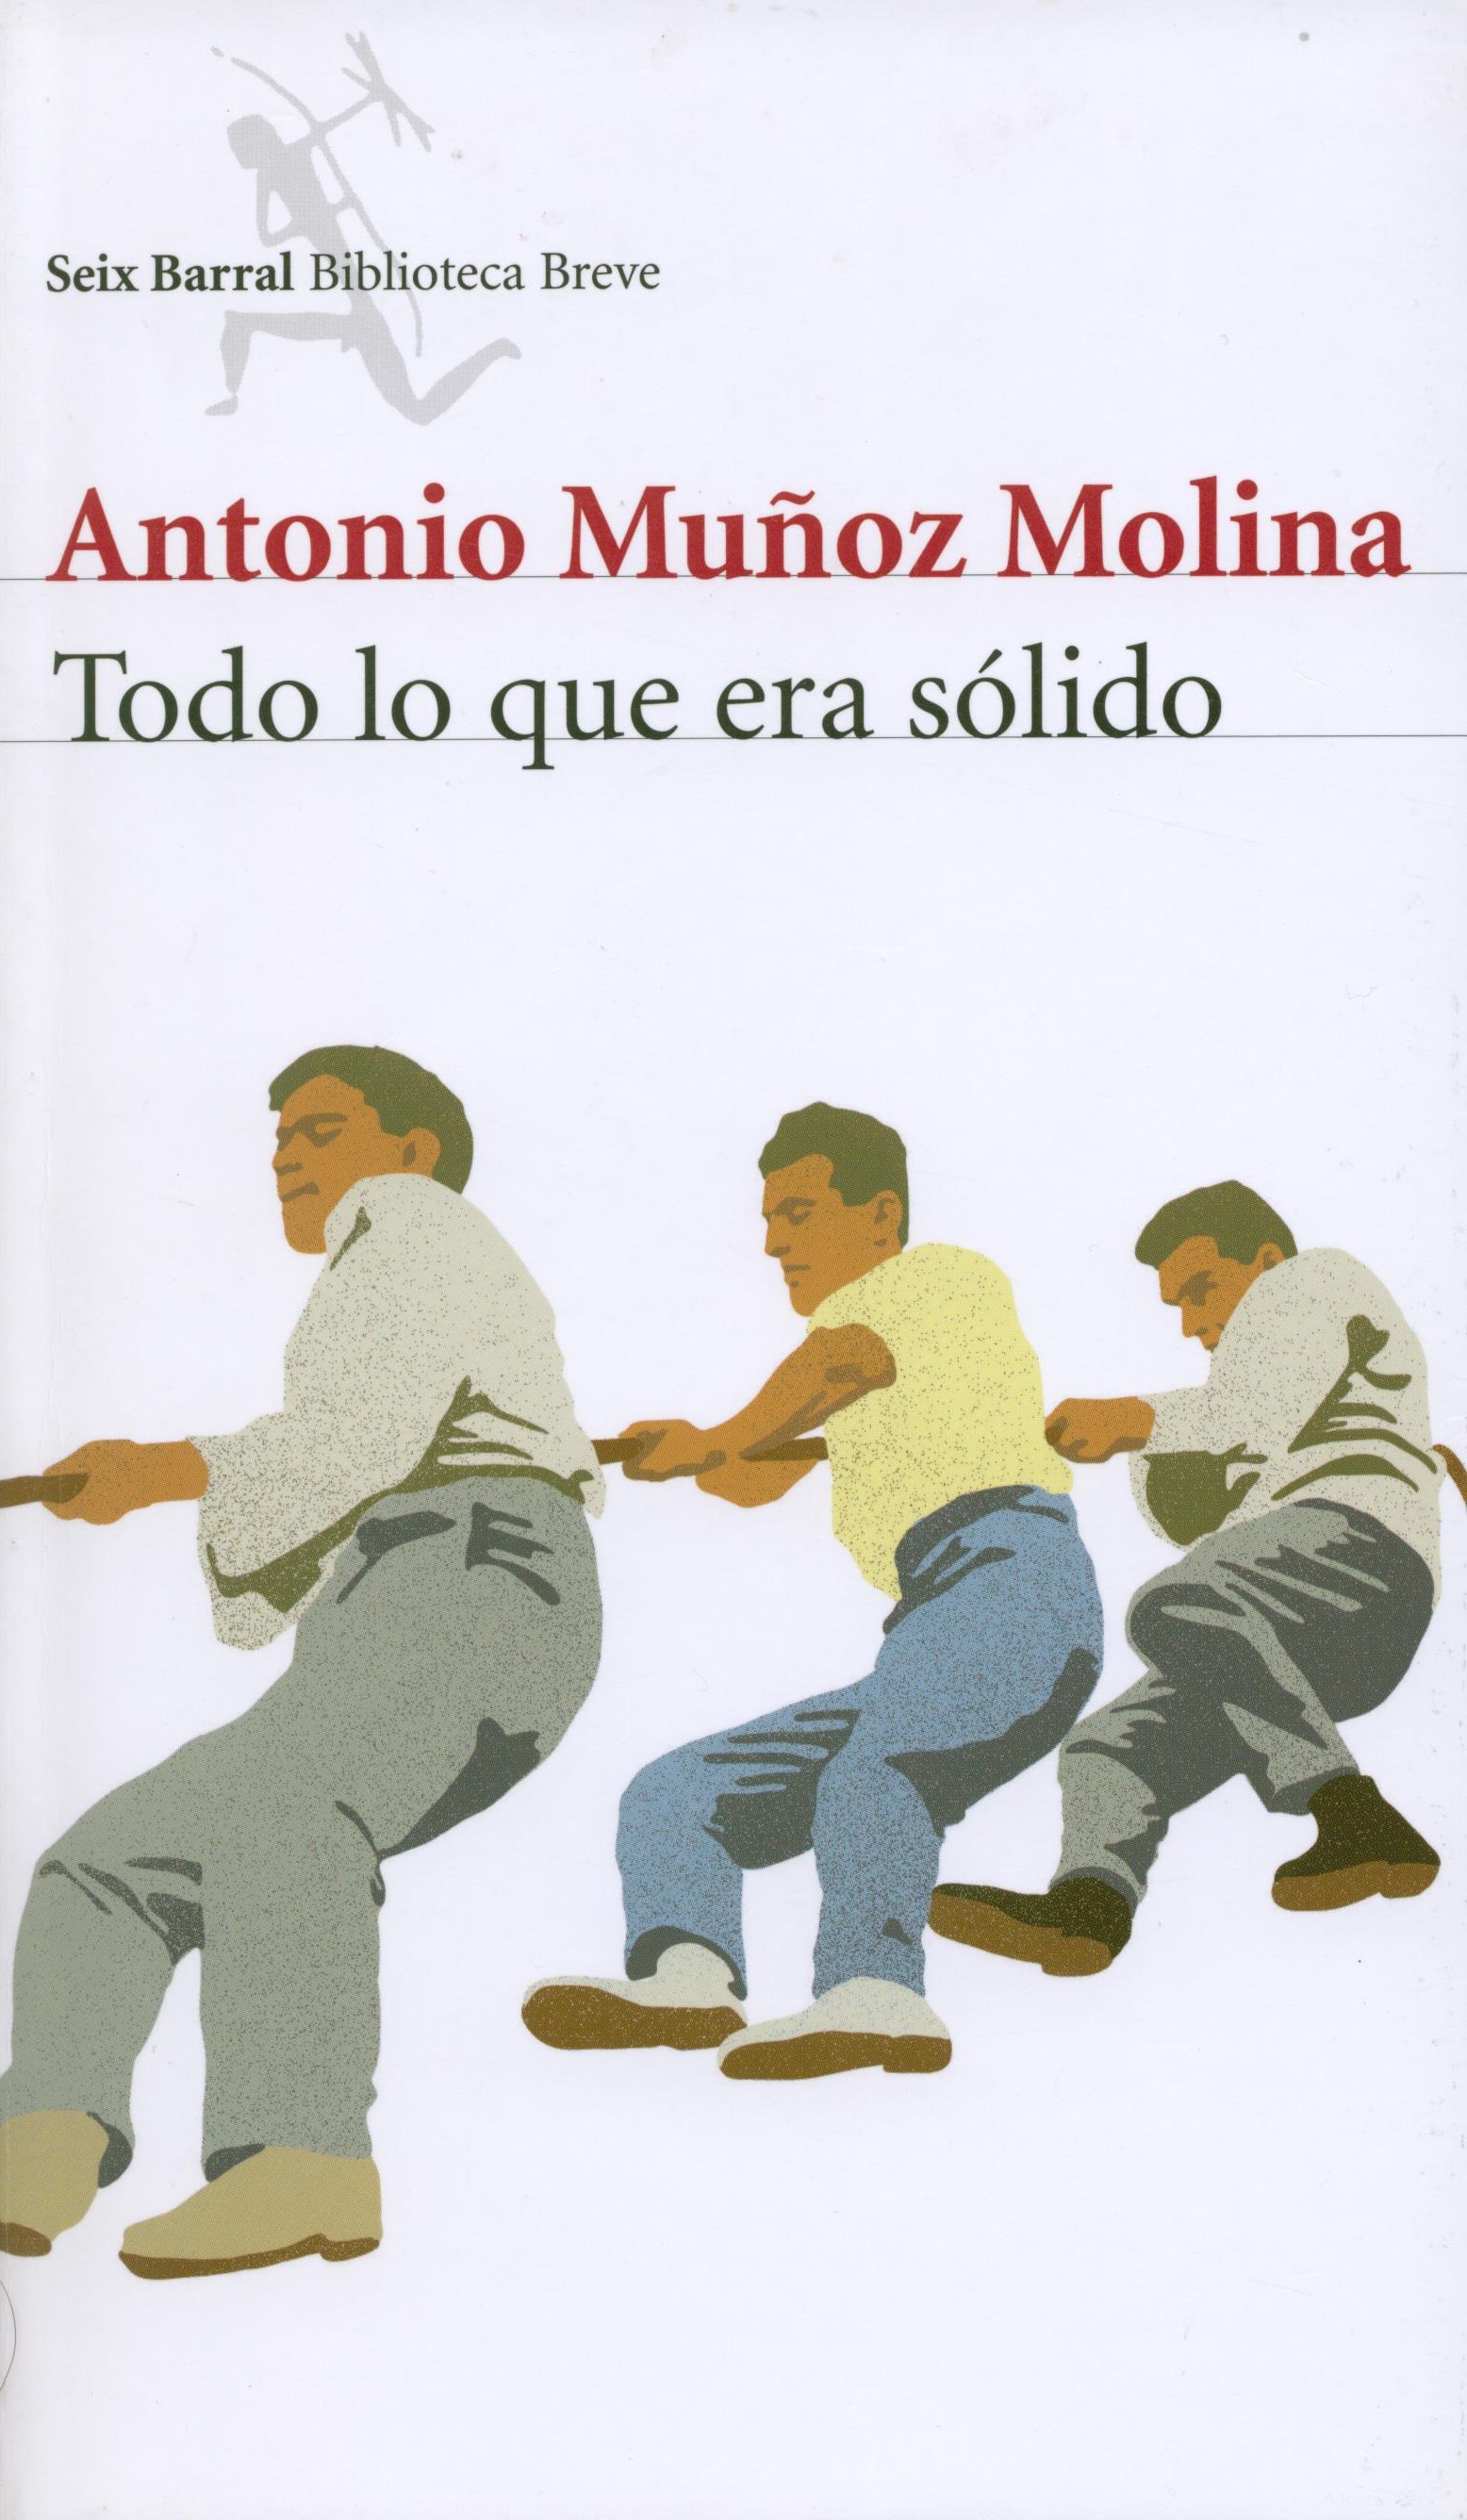 Portada libro de Muñoz Molina